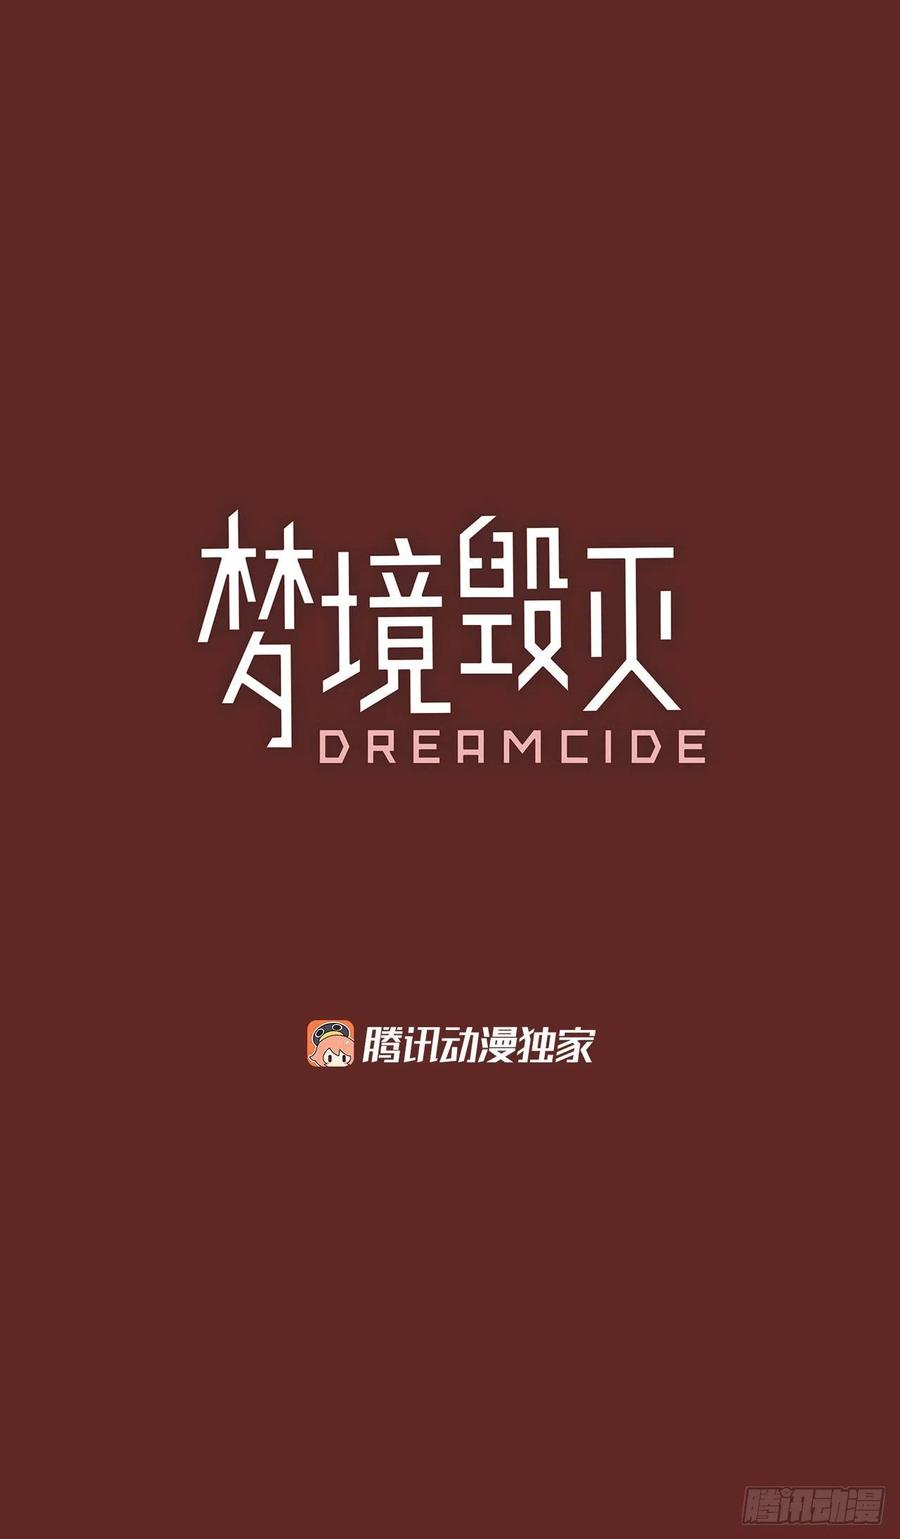 梦境毁灭Dreamcide - 83.人心最可怕（1）(1/2) - 2